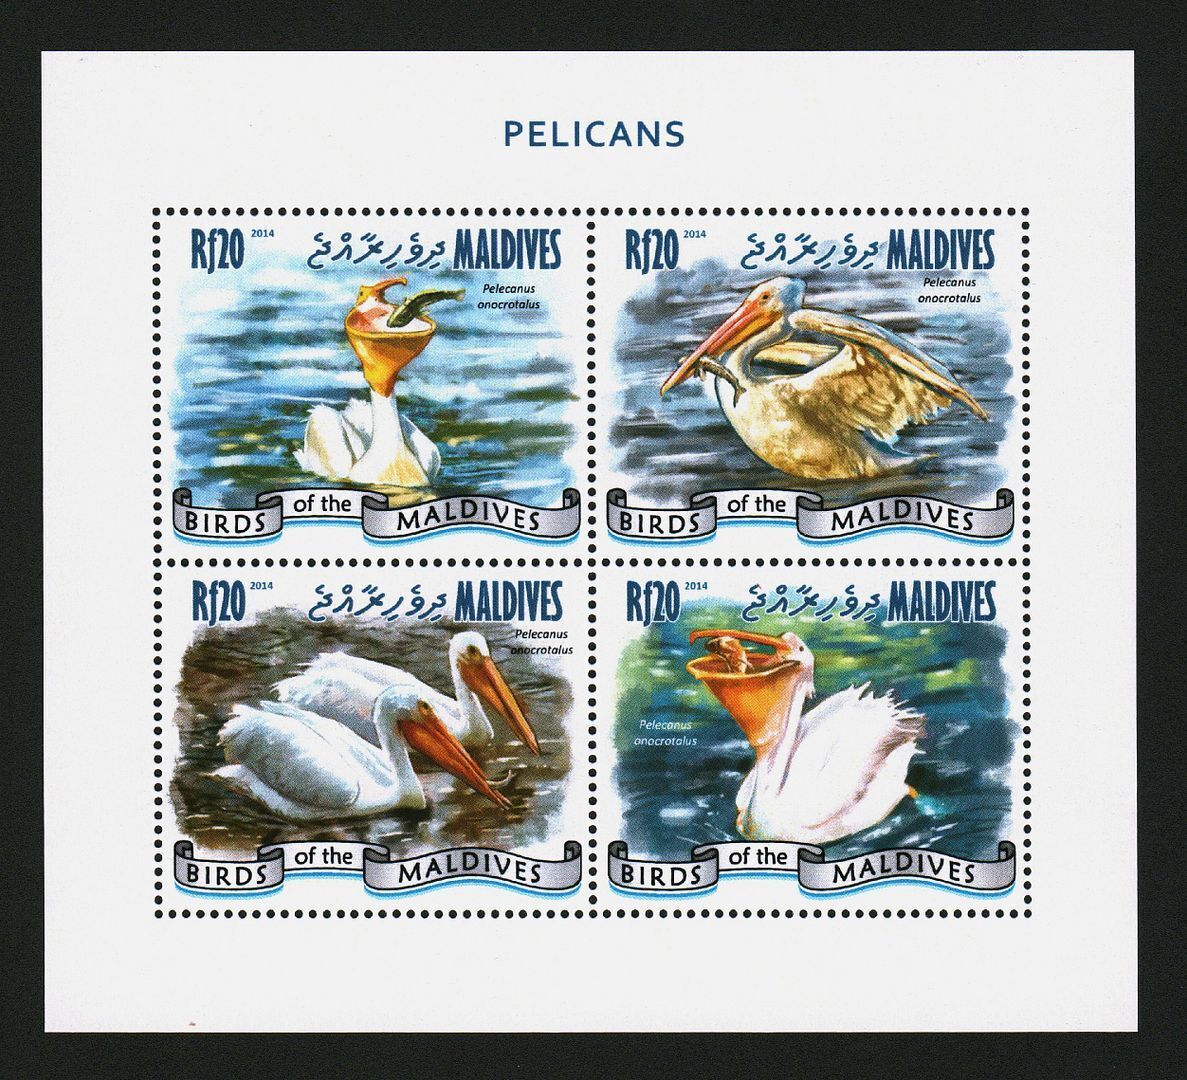 Maldives 2014 Stamps Sheet Pelicans Birds Mnh #14205